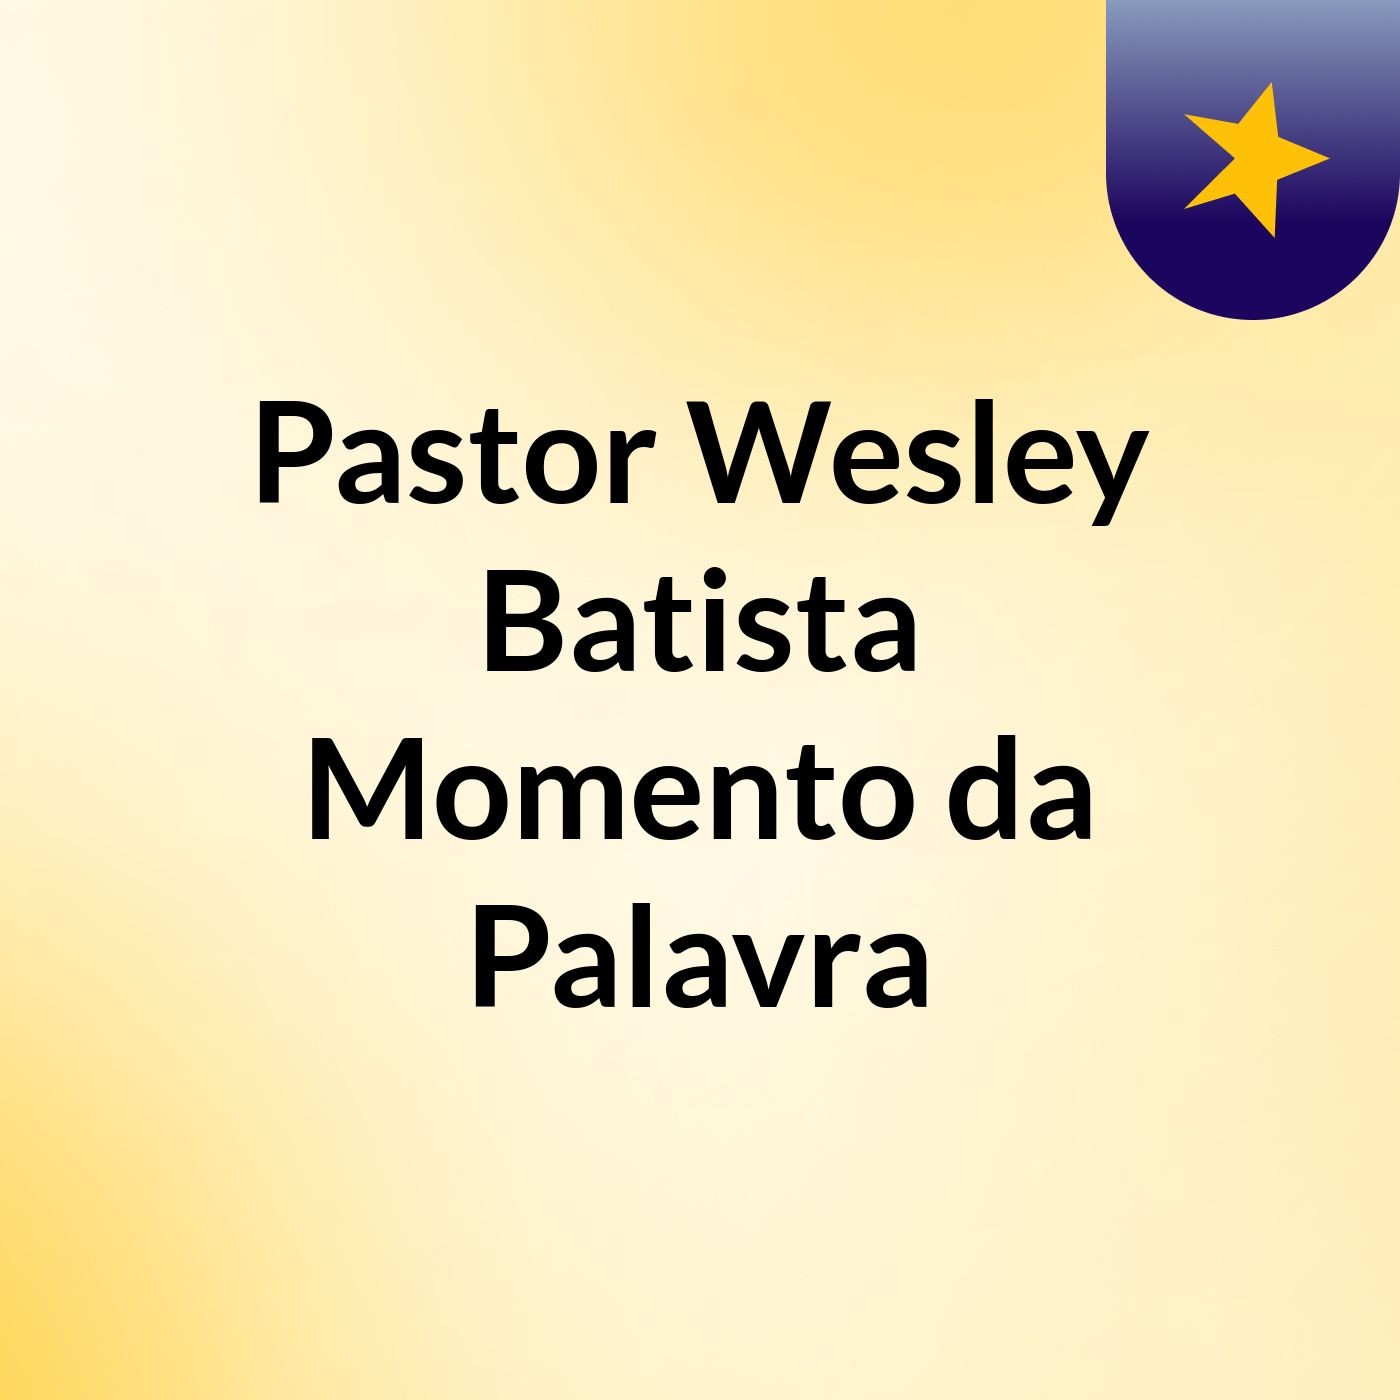 Pastor Wesley Batista Momento da Palavra